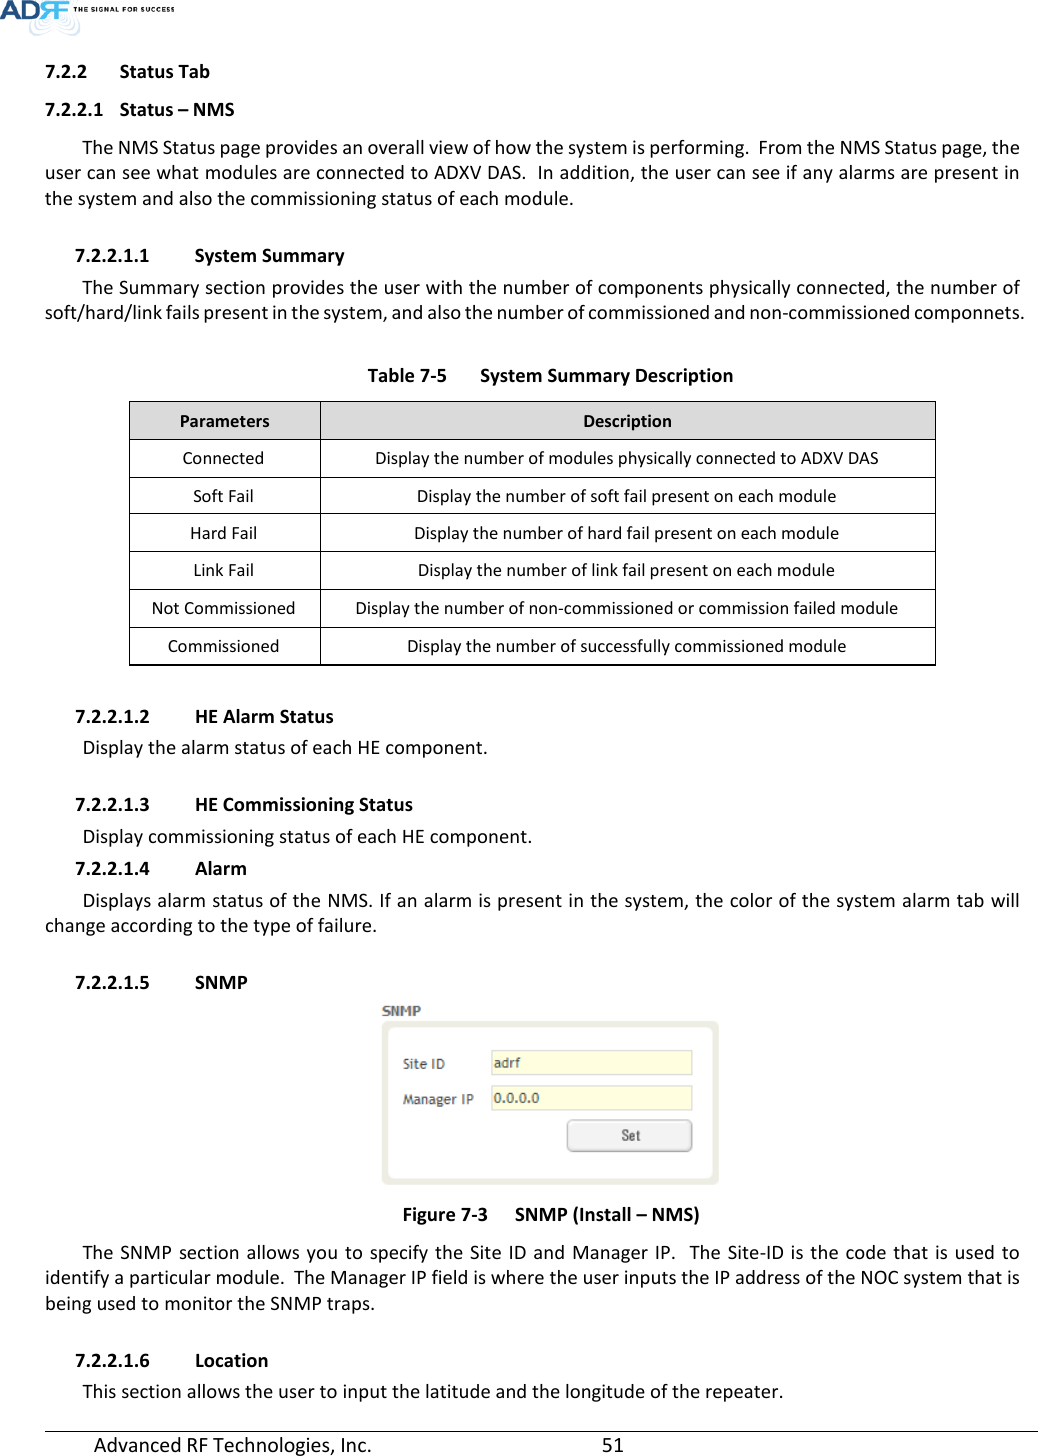 Page 51 of ADRF KOREA ADXV-R-78P-NA DAS (Distributed Antenna System) User Manual ADXV DAS